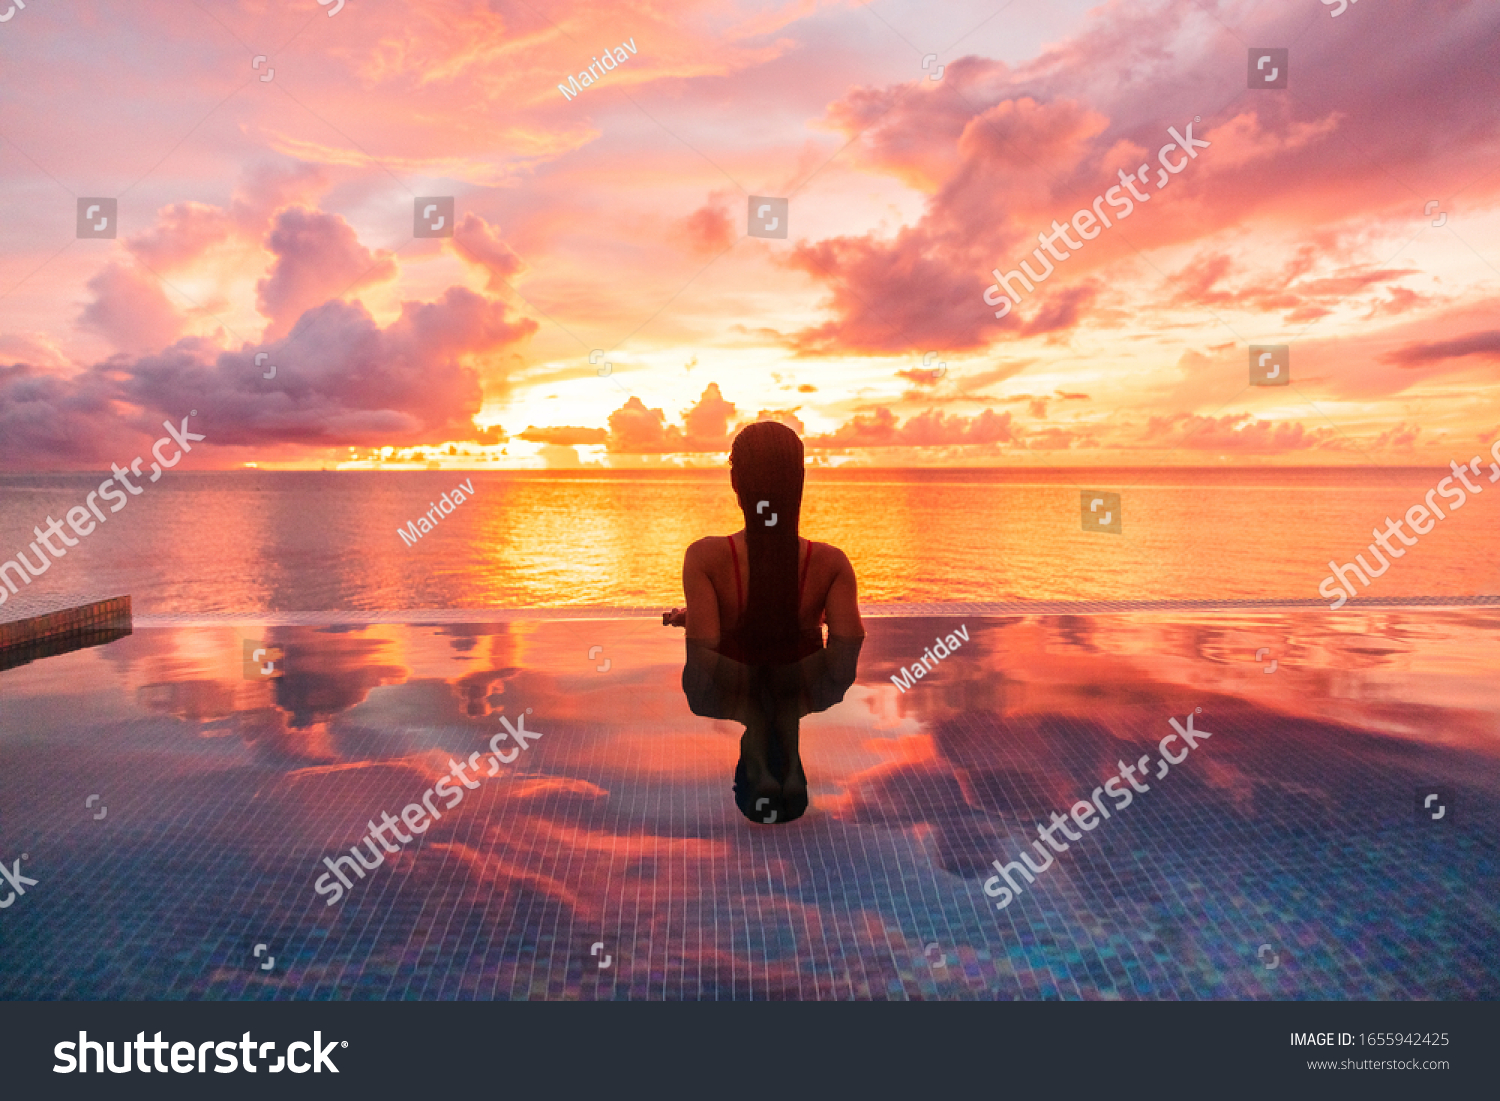 Paradise luxury resort honeymoon getaway destination at idyllic Caribbean tropical landscape hotel, woman silhouette swimming in infinity pool watching sunset serene. Winter getaway at dusk. #1655942425